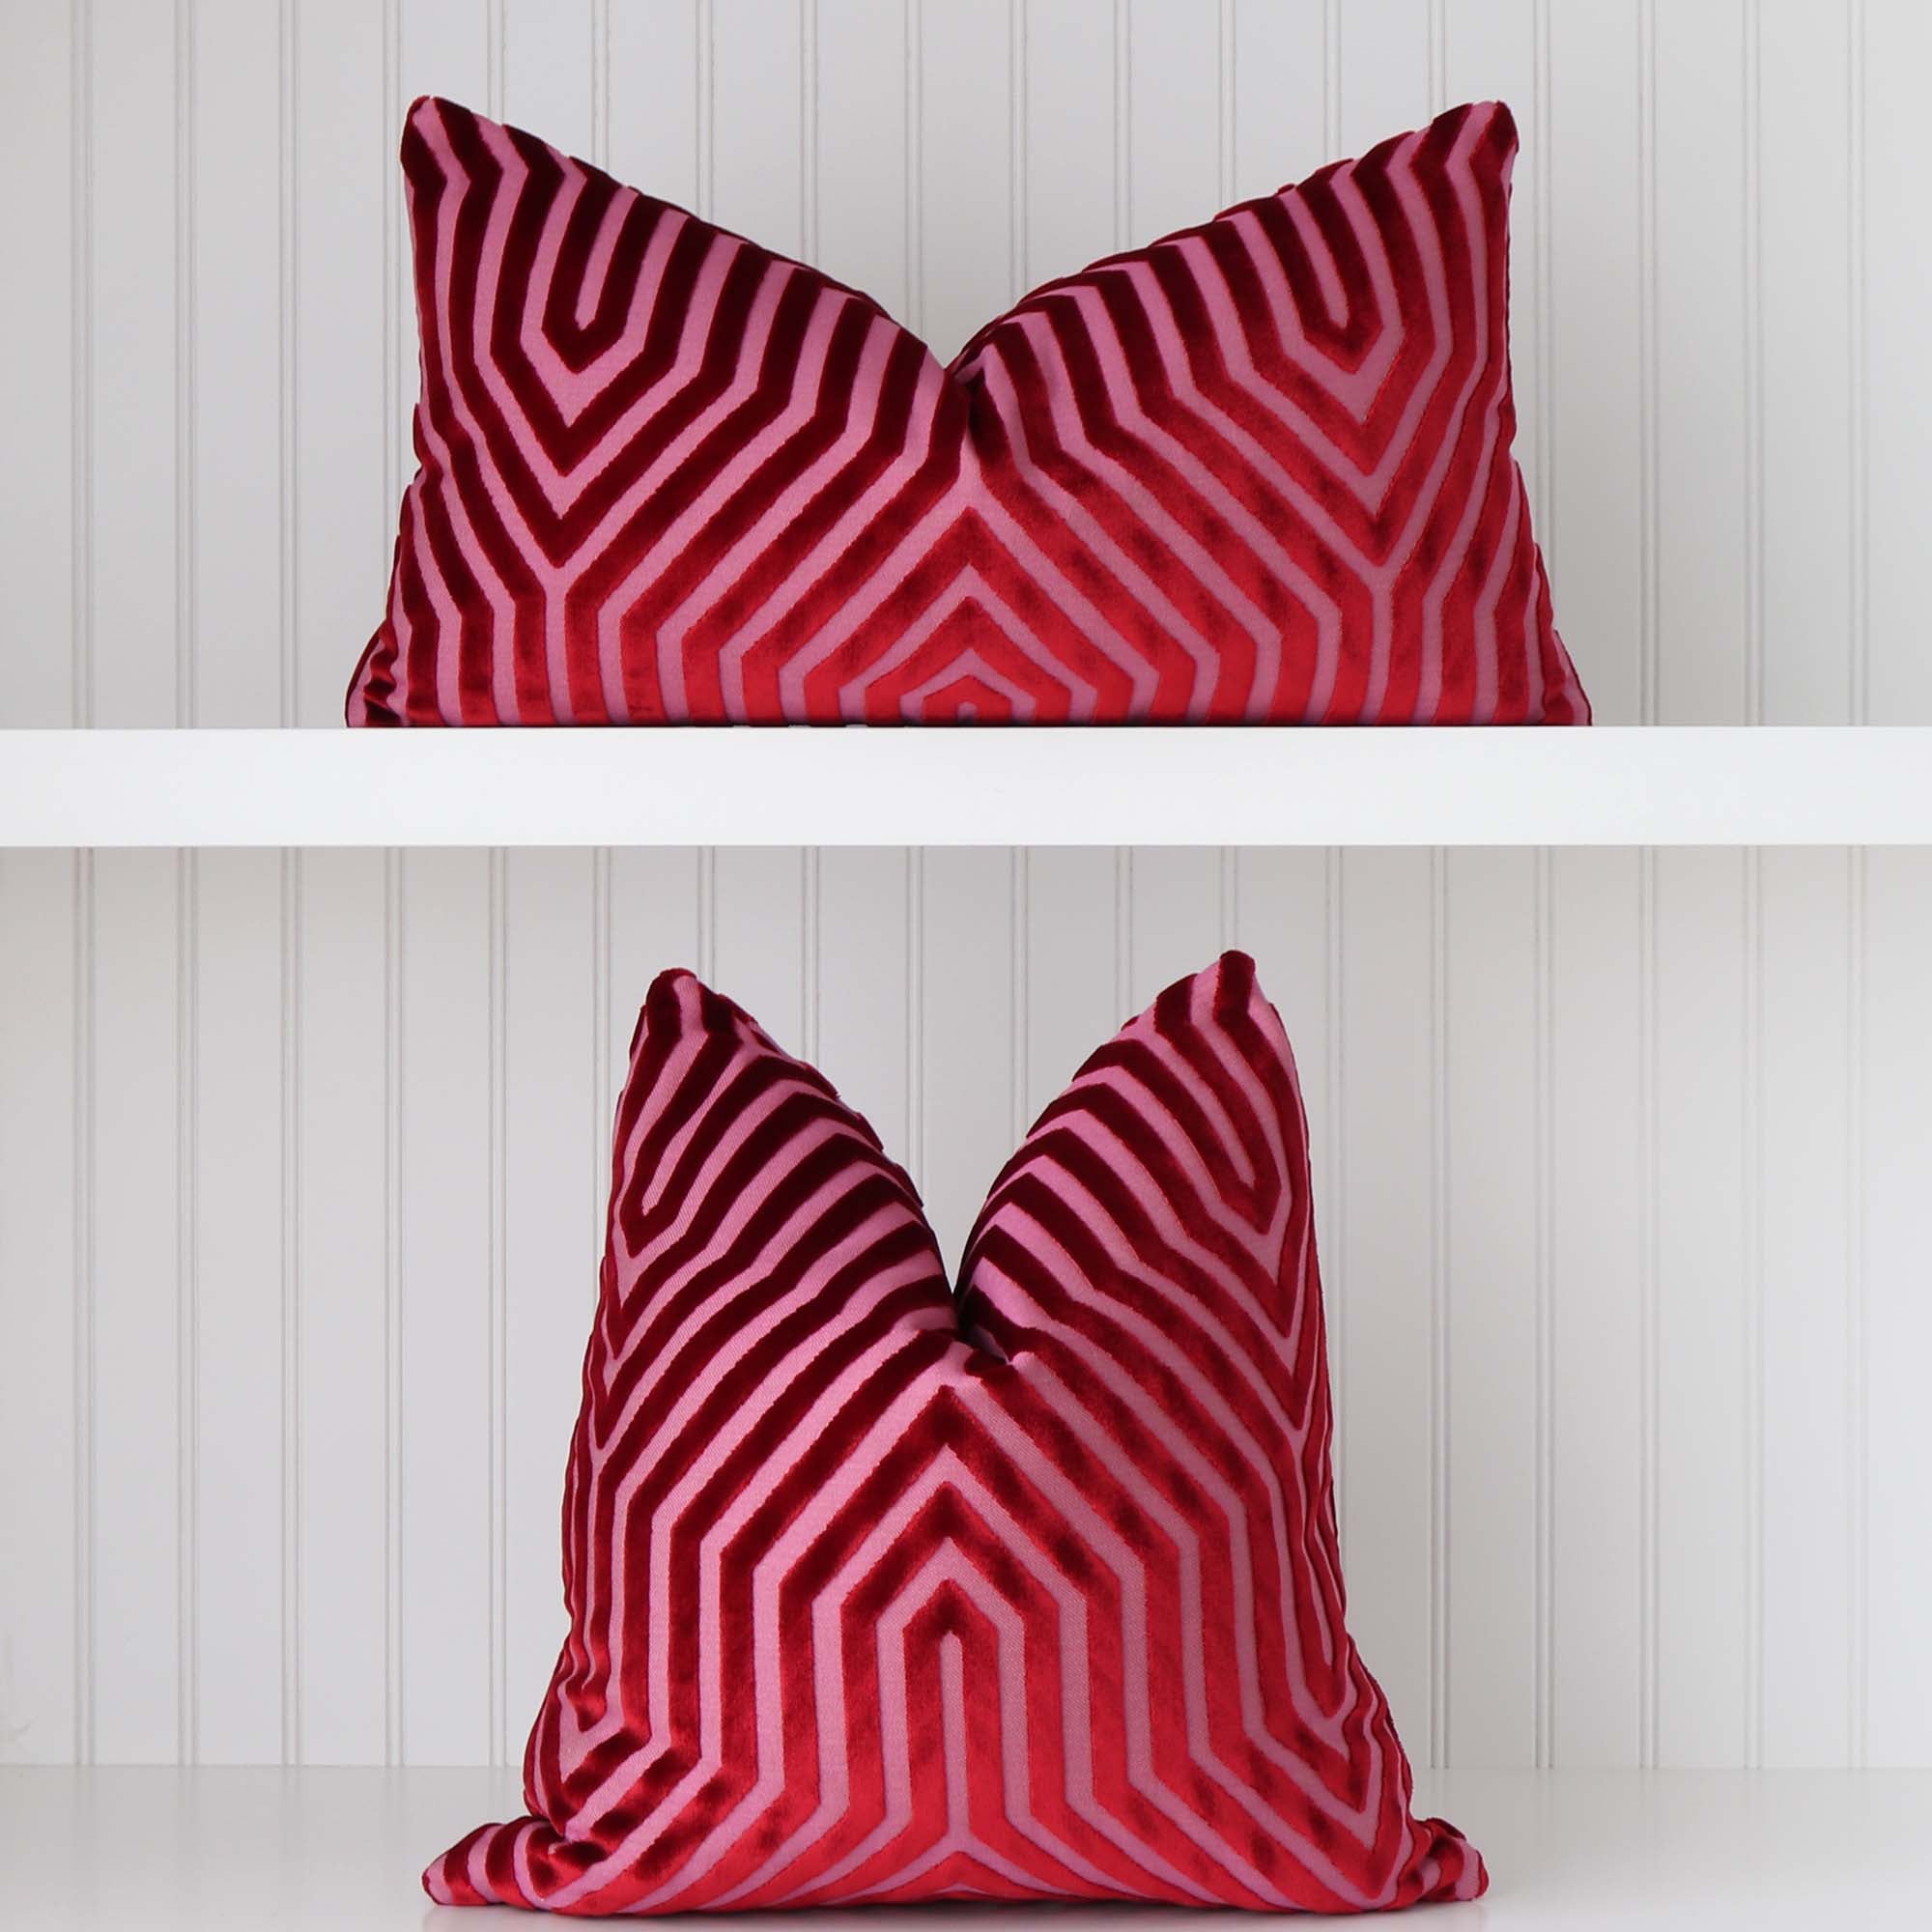 Schumacher Vanderbilt Pink Fuchsia Cut Velvet Designer Luxury Decorative Throw Pillow Cover Available in Square and Lumbar Sizes